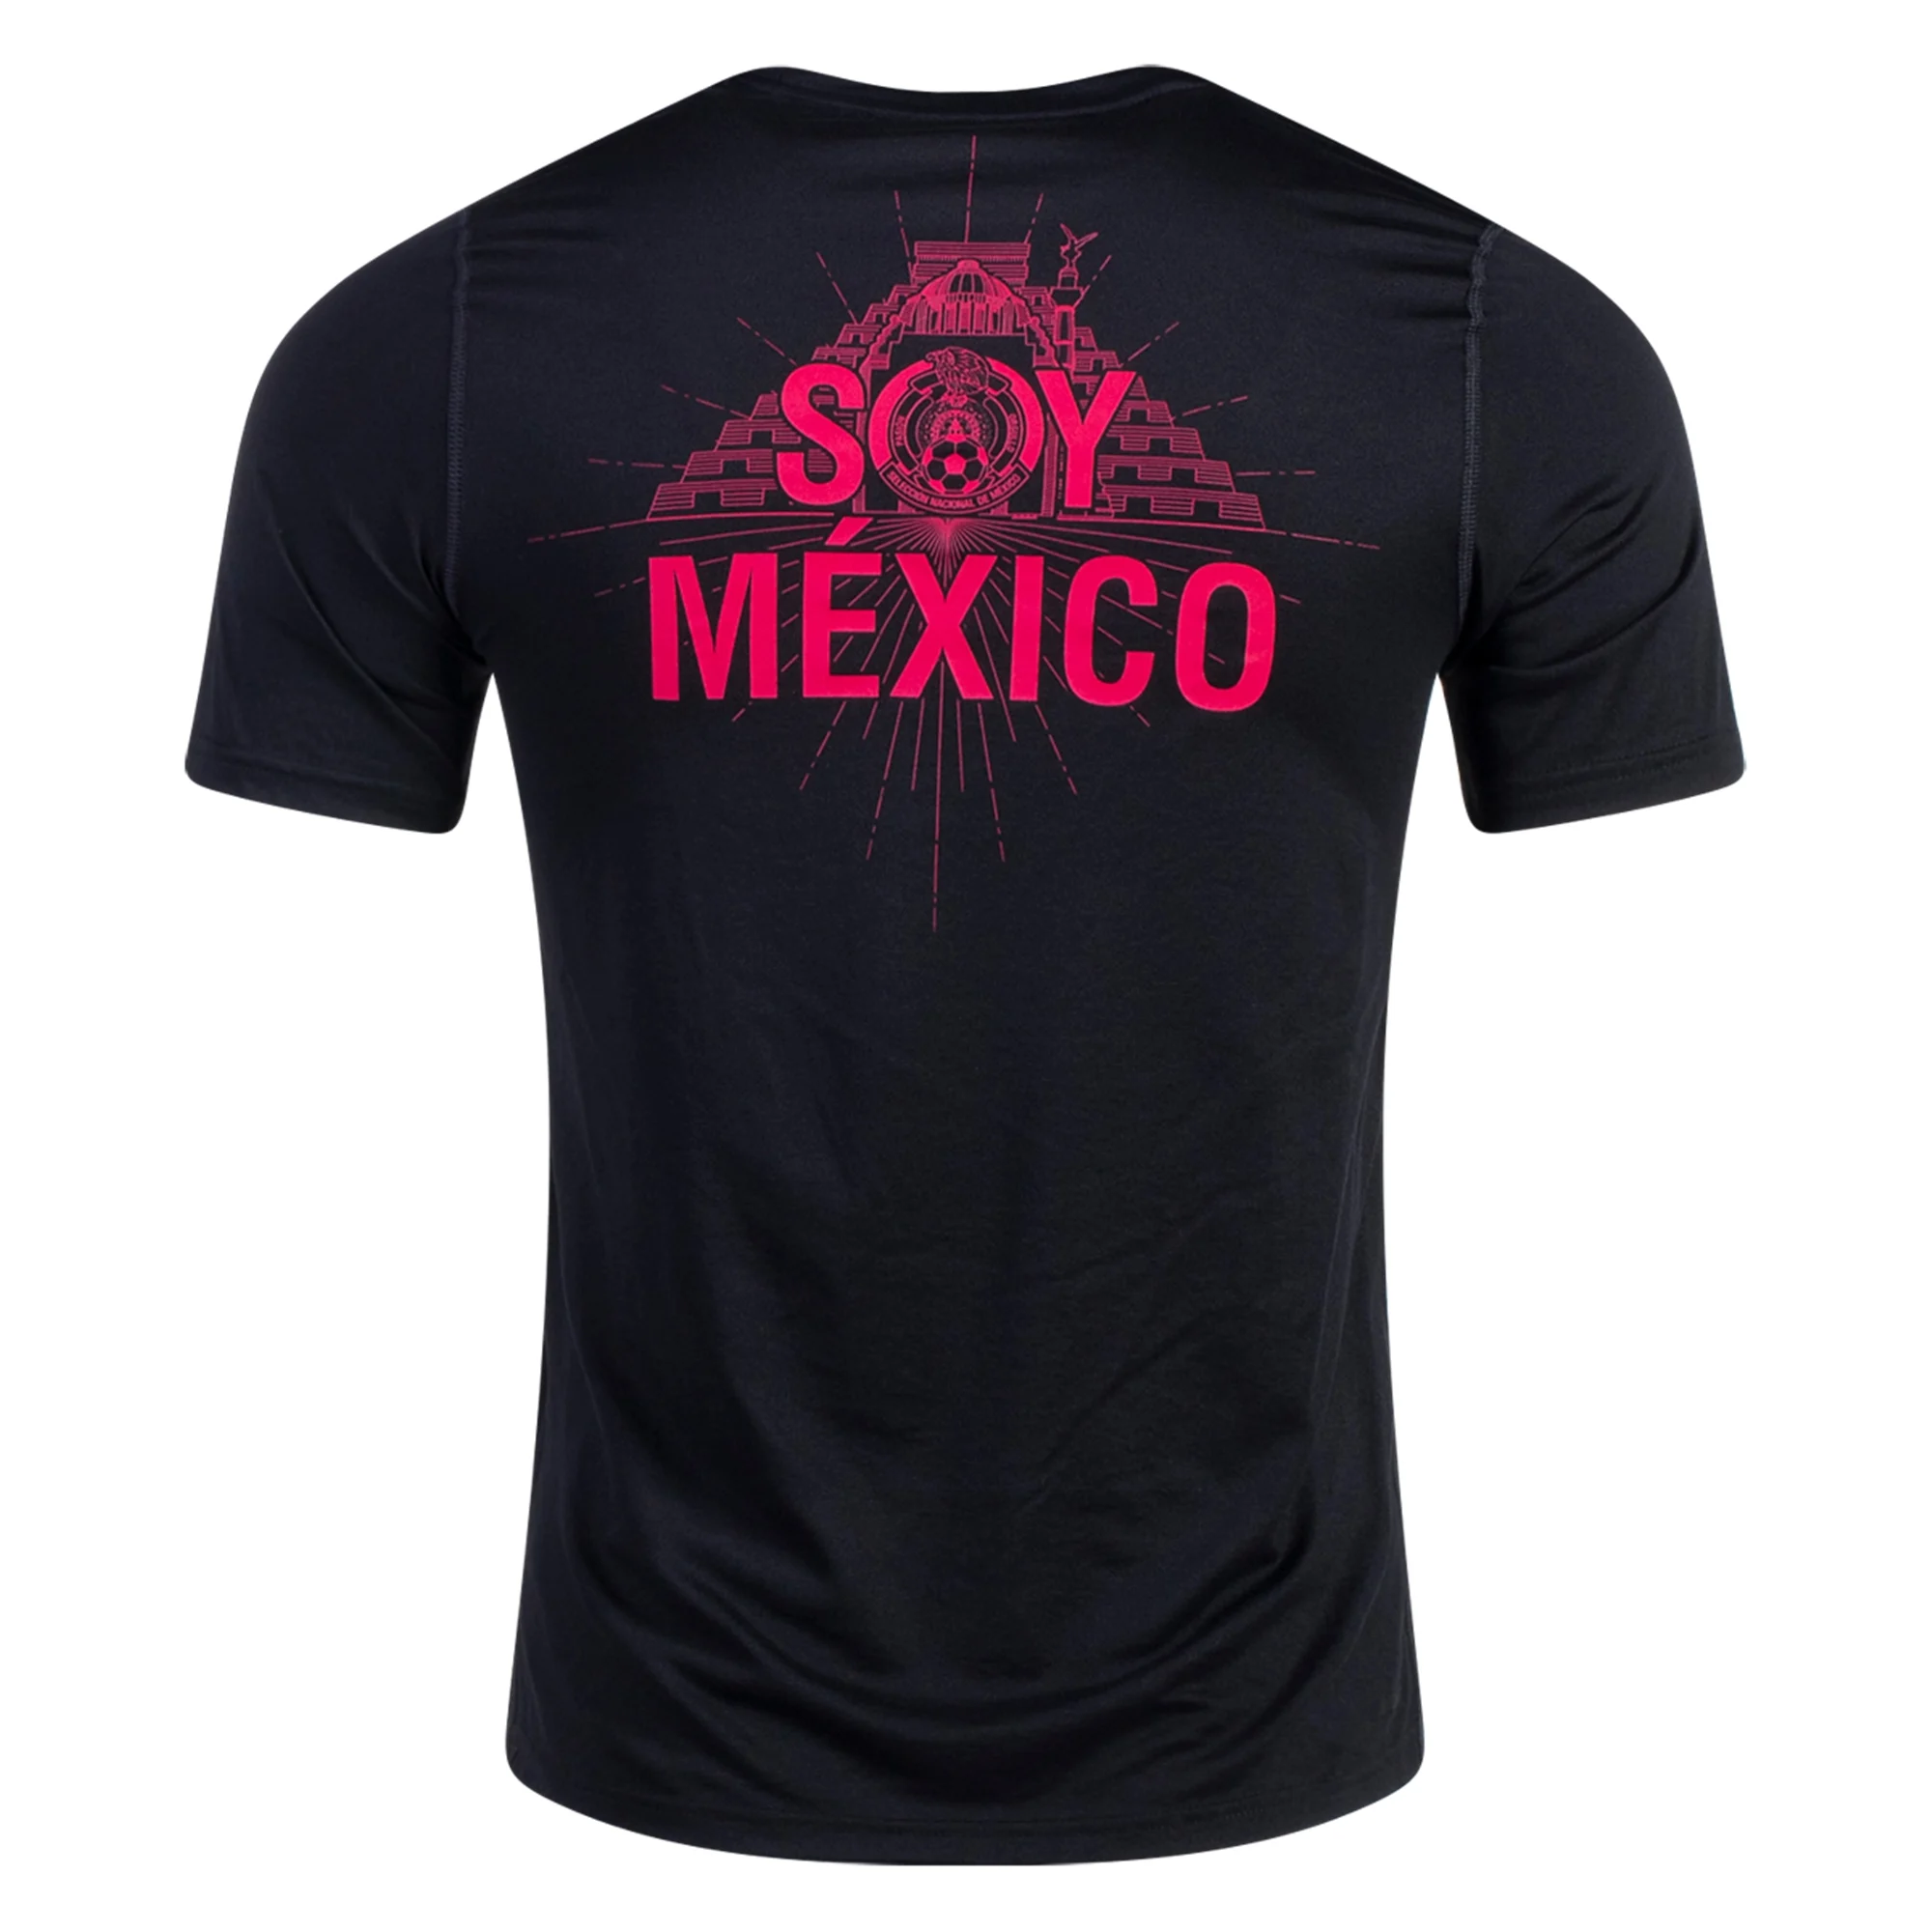 Adidas Mexico Creator T-Shirt- Black/Pink